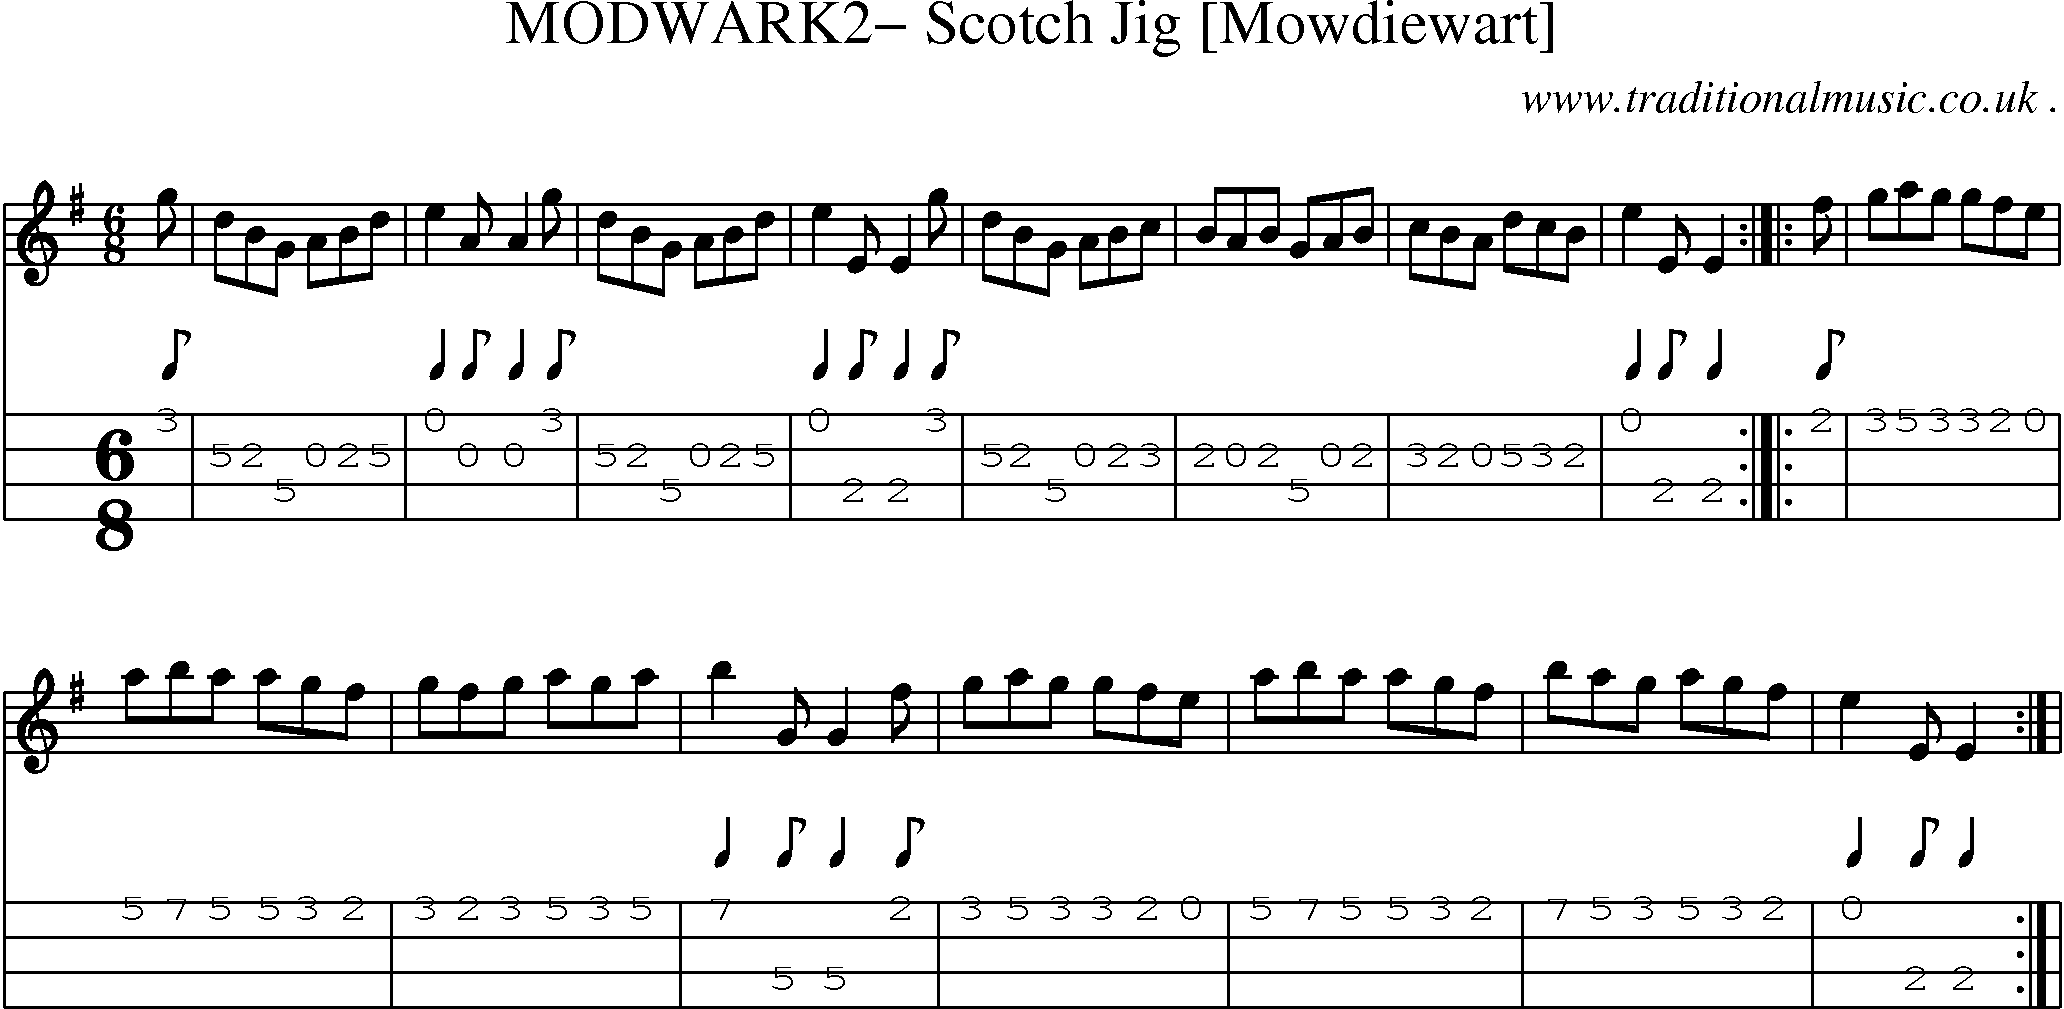 Sheet-Music and Mandolin Tabs for Modwark2 Scotch Jig